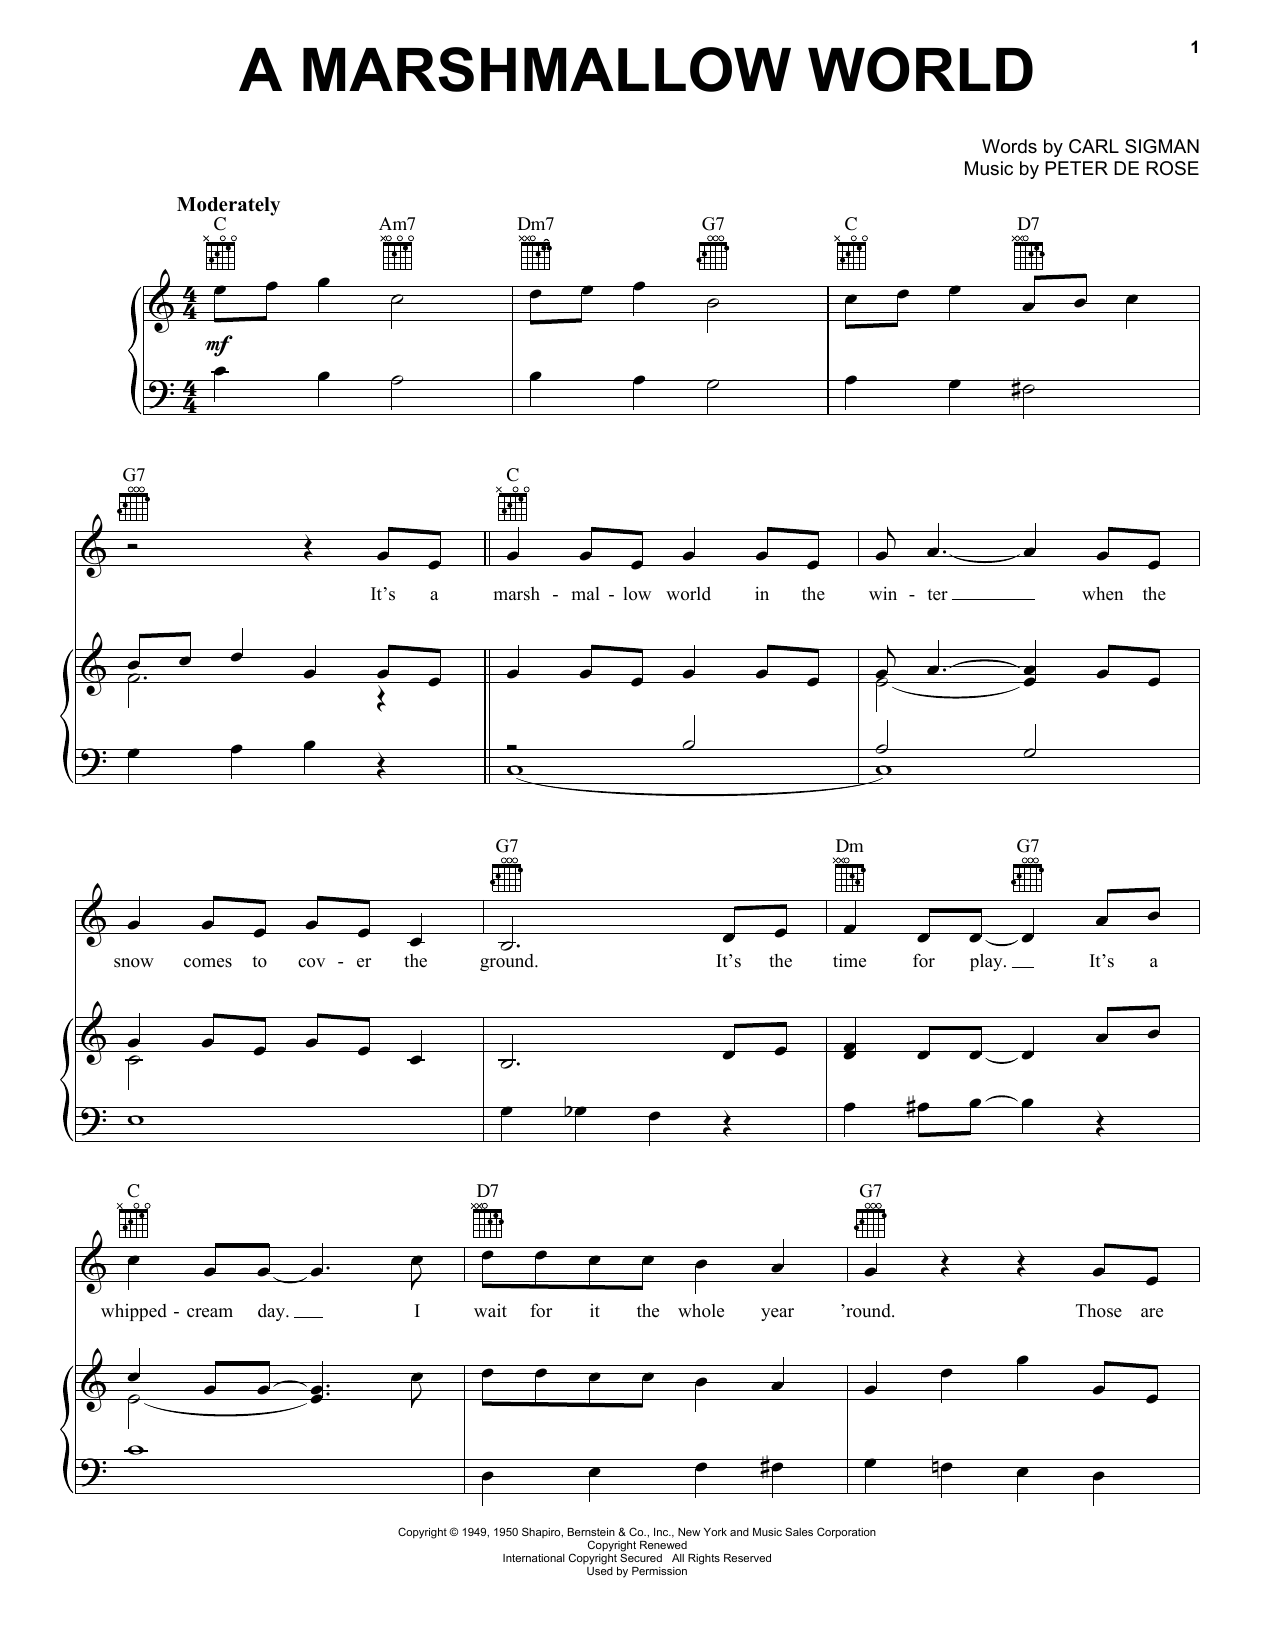 Carl Sigman & Peter De Rose A Marshmallow World Sheet Music Notes & Chords for Trombone - Download or Print PDF